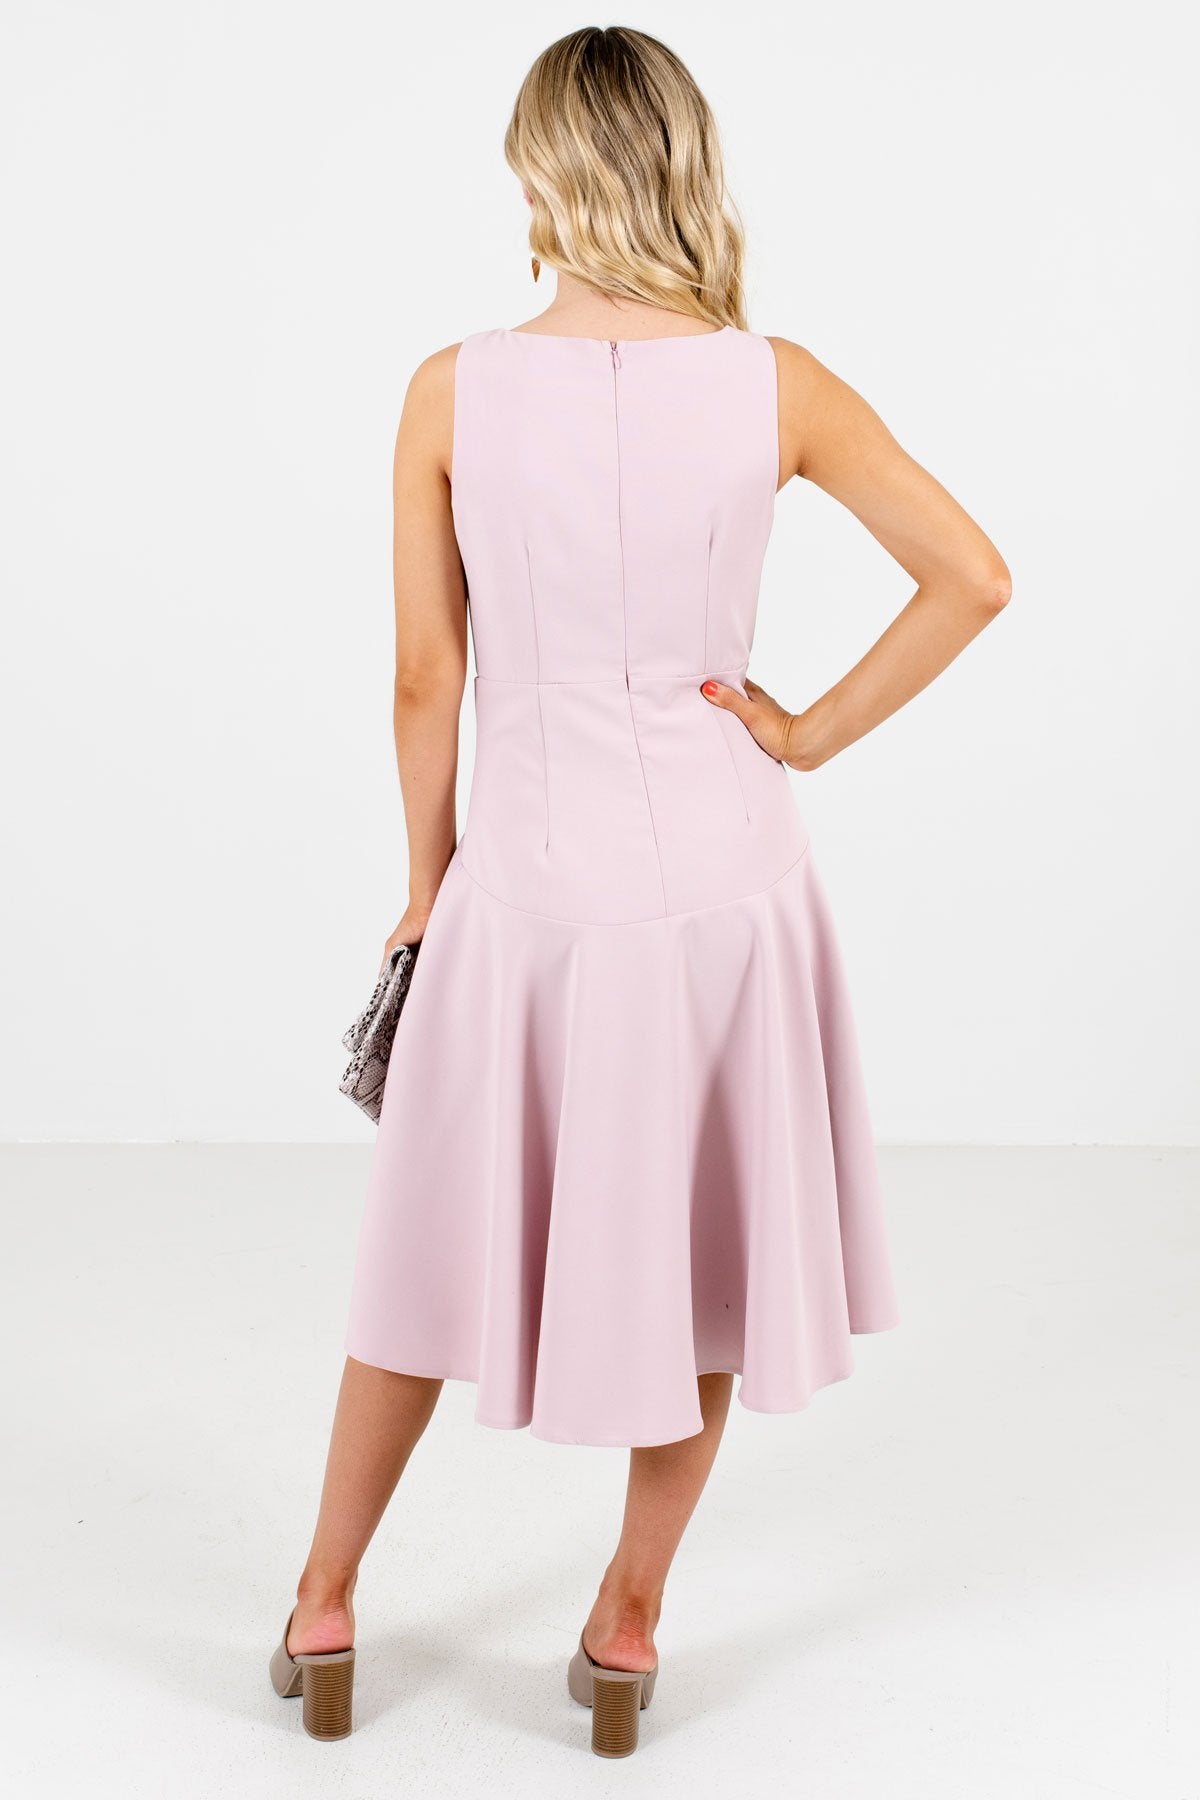 Women's Blush Pink Tank Style Boutique Knee-Length Dress